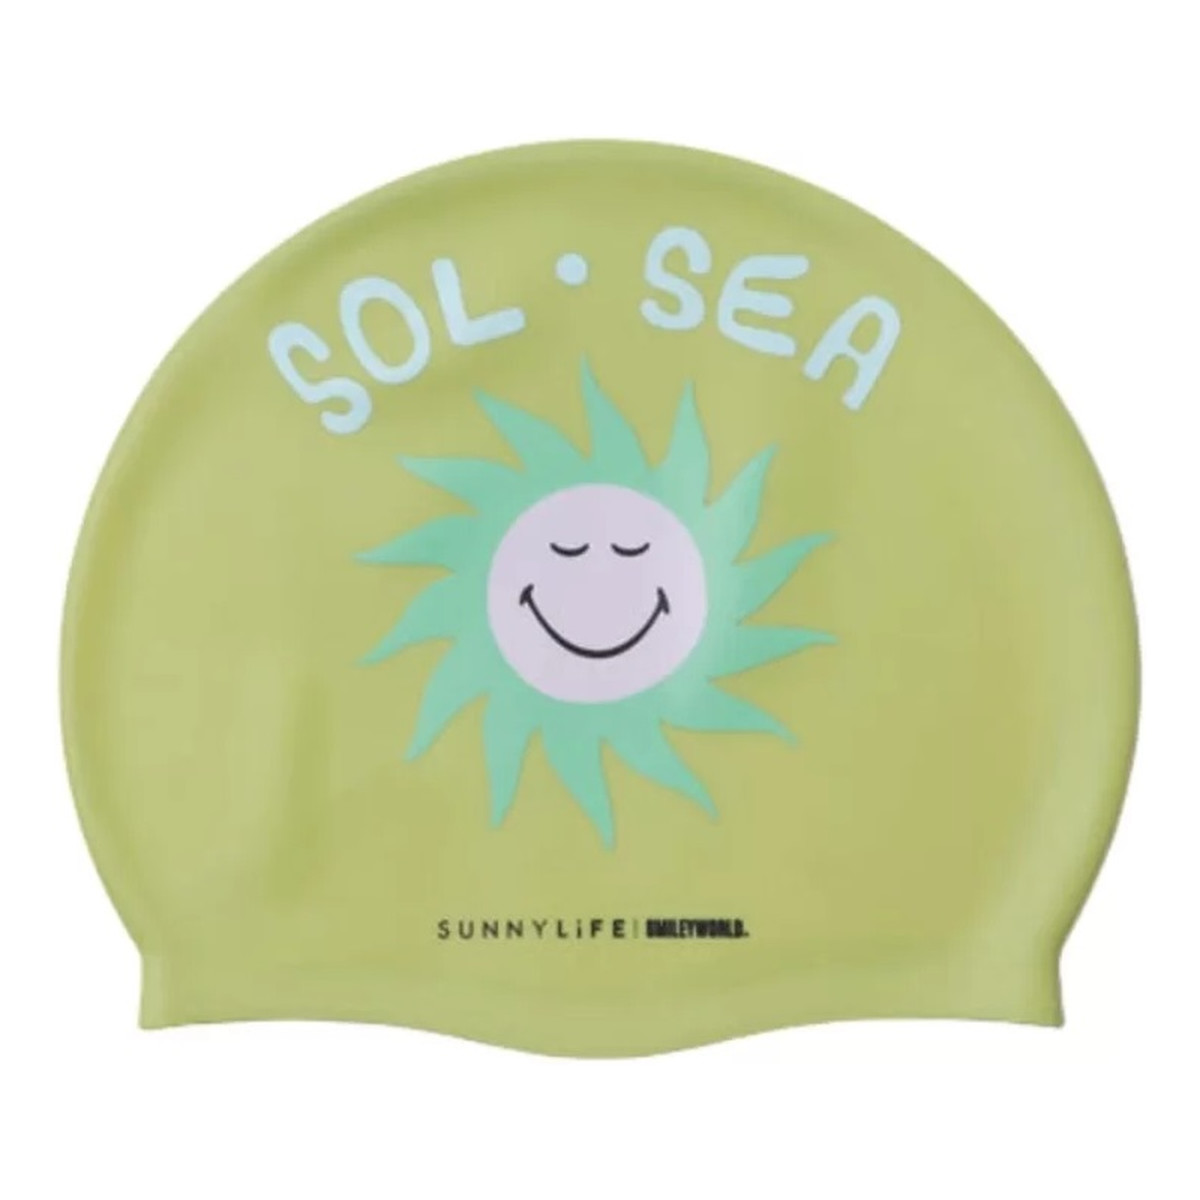 Sunnylife Smiley czepek basenowy world sol sea